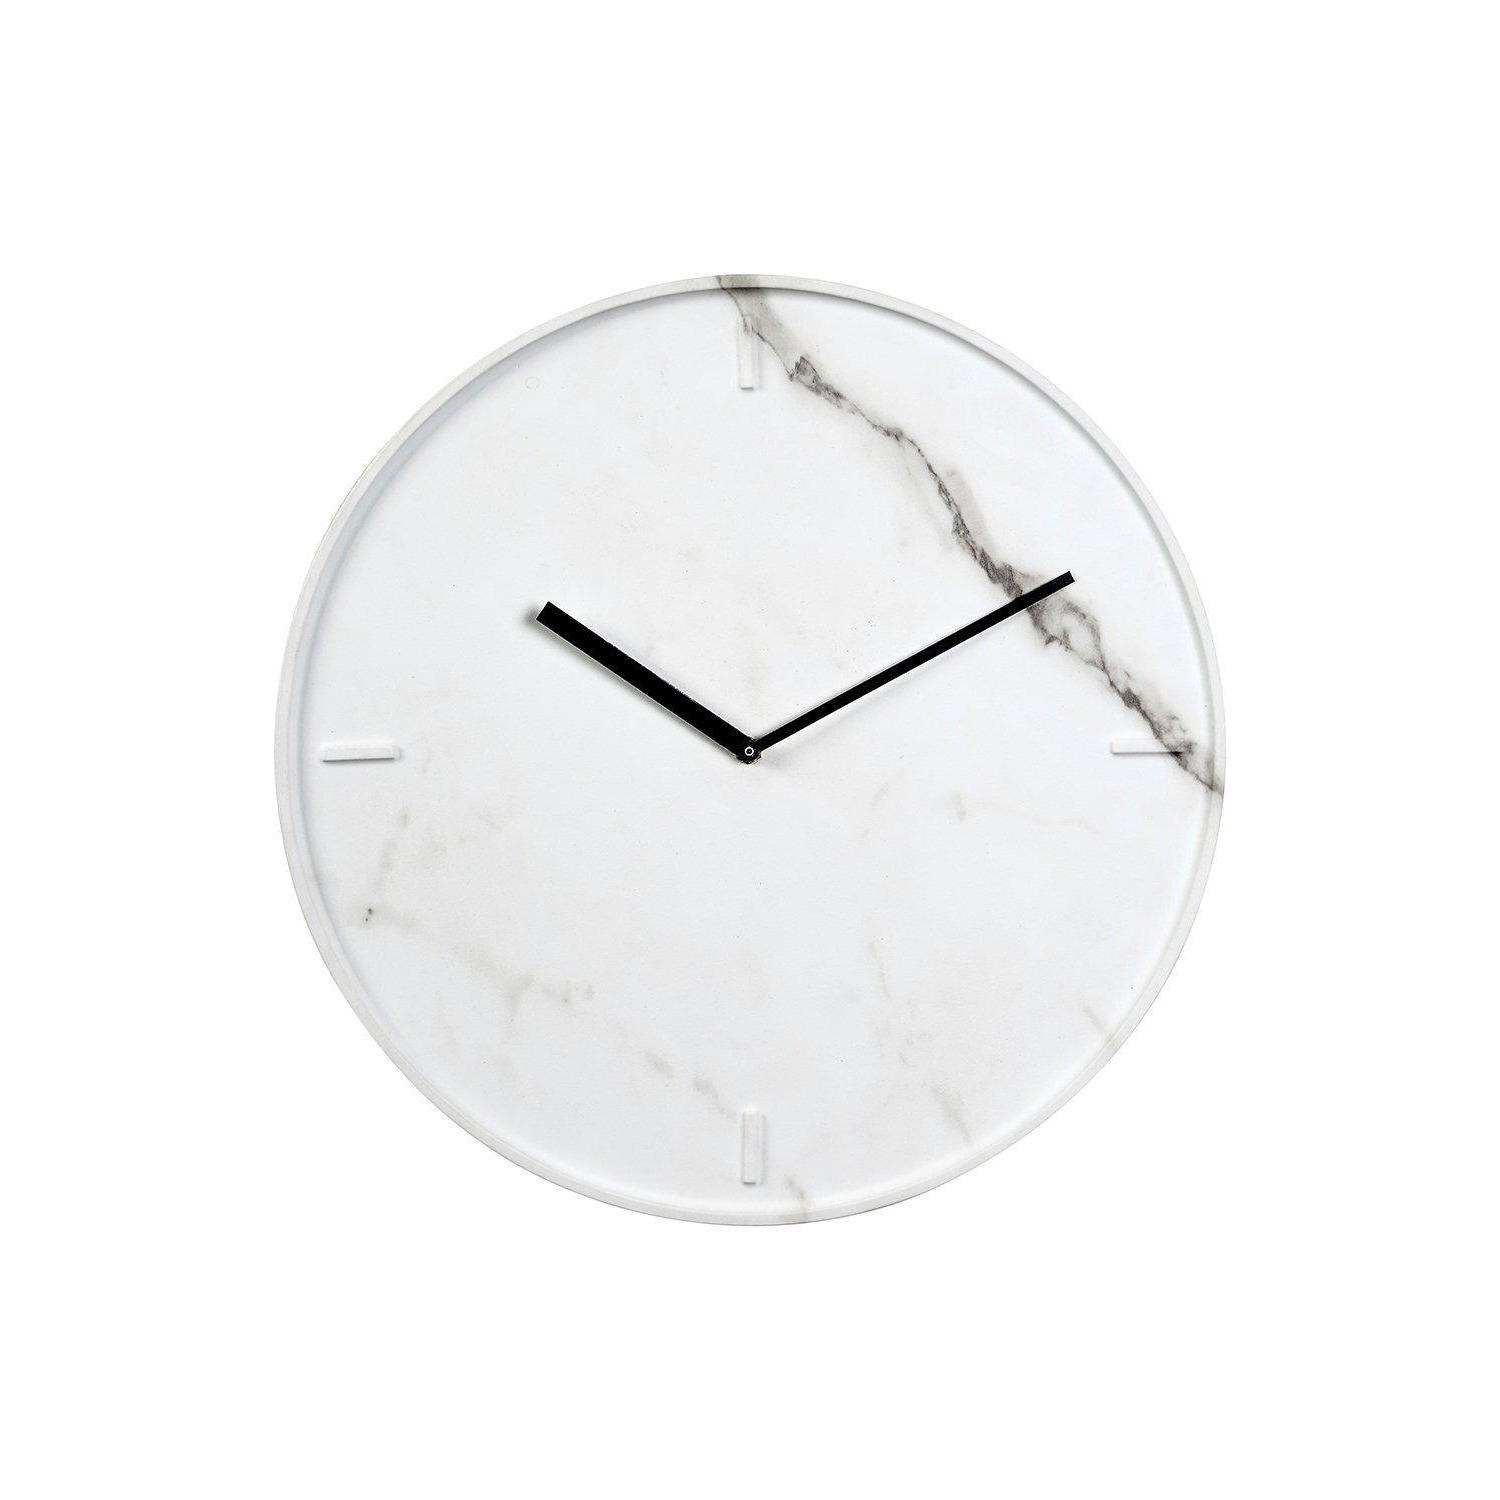 Modena White Marble Veneer Round Wall Clock - image 1